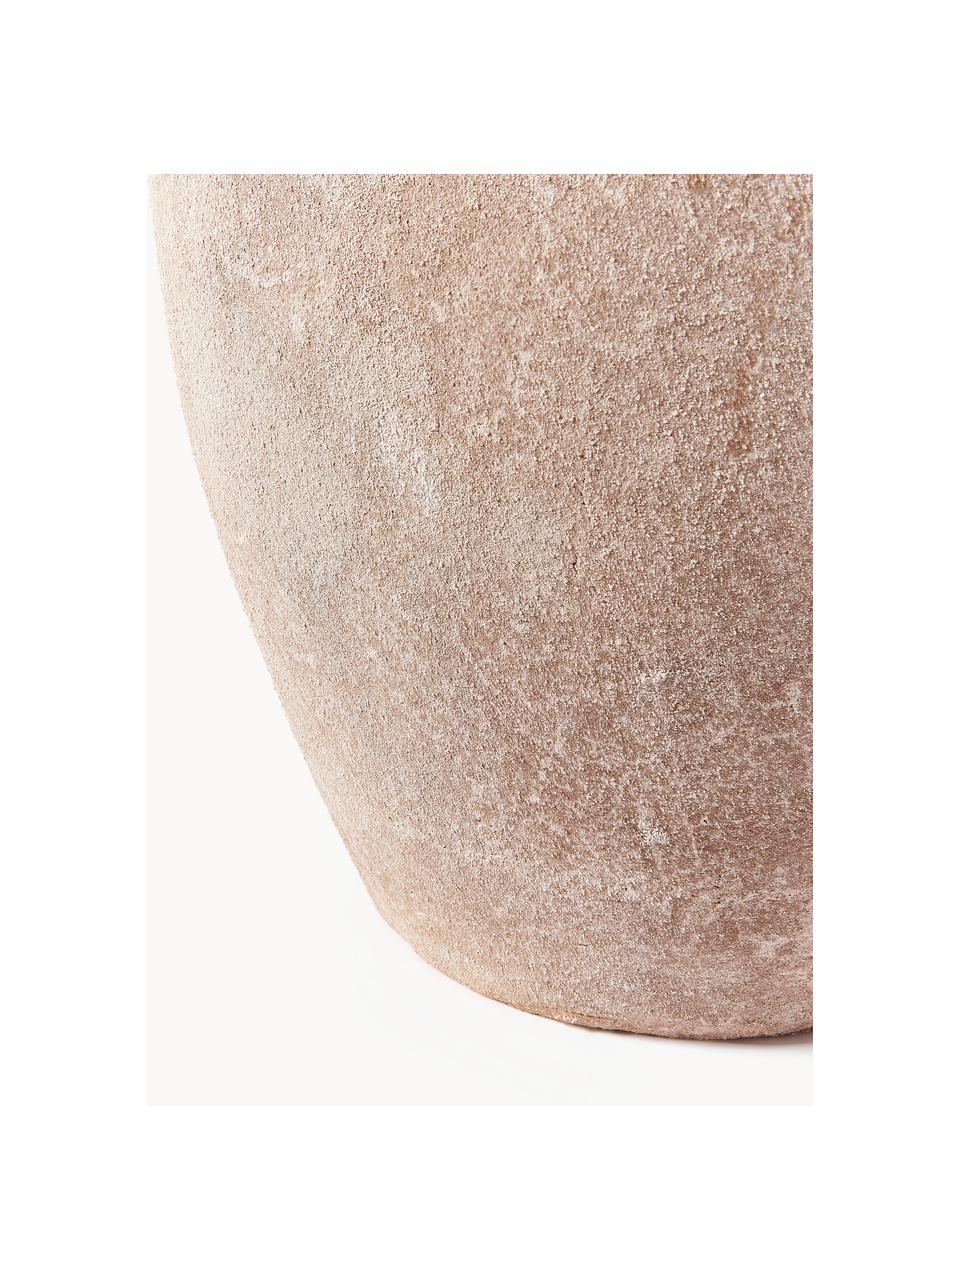 Große Bodenvase Leana mit Sand-Finish, H 50 cm, Terrakotta, Terrakotta, Ø 41 x H 50 cm